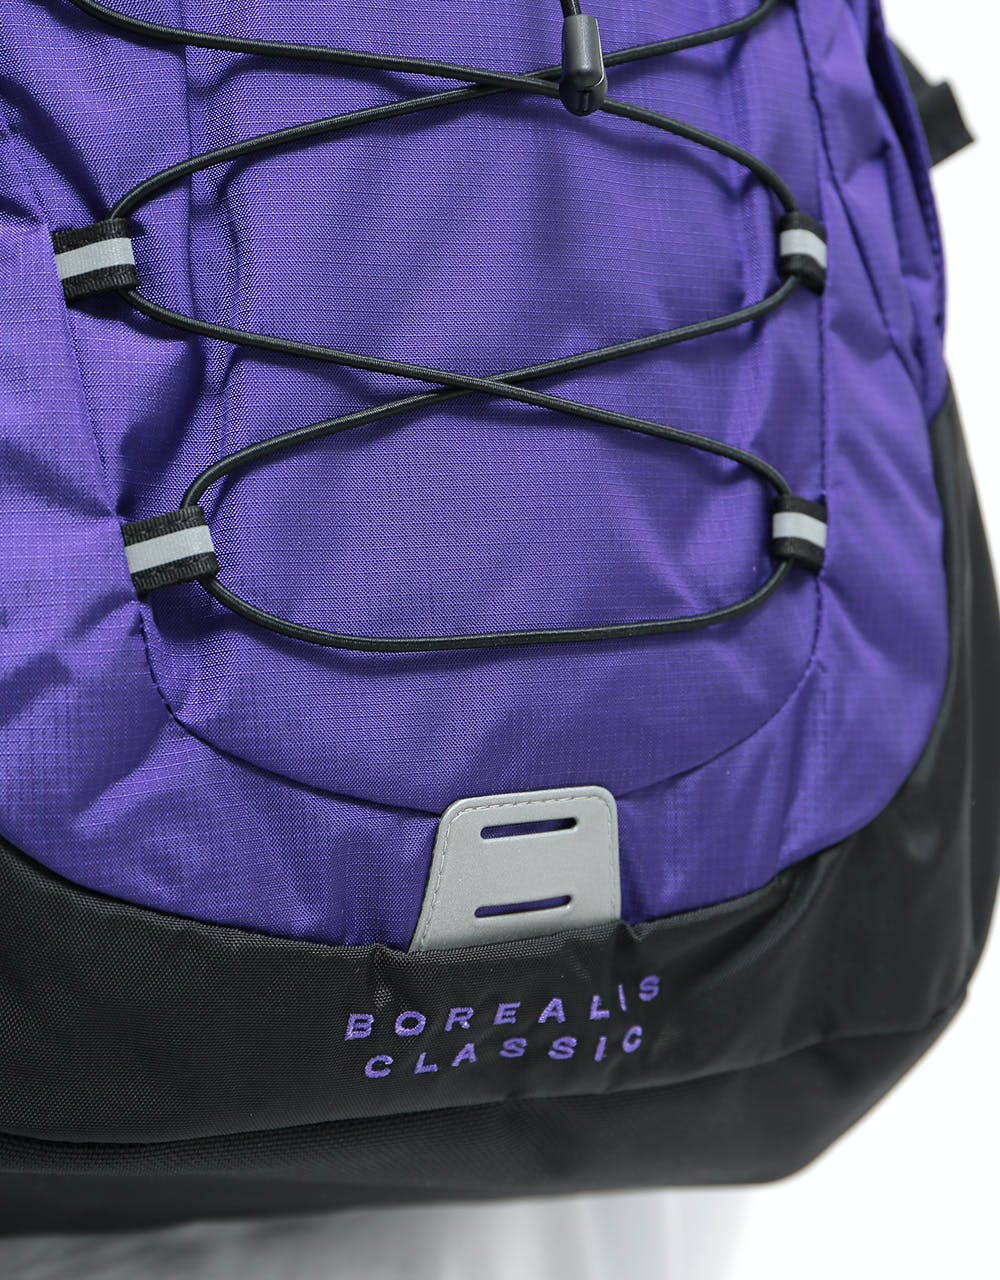 The North Face Borealis Classic Backpack - Peak Purple Ripstop